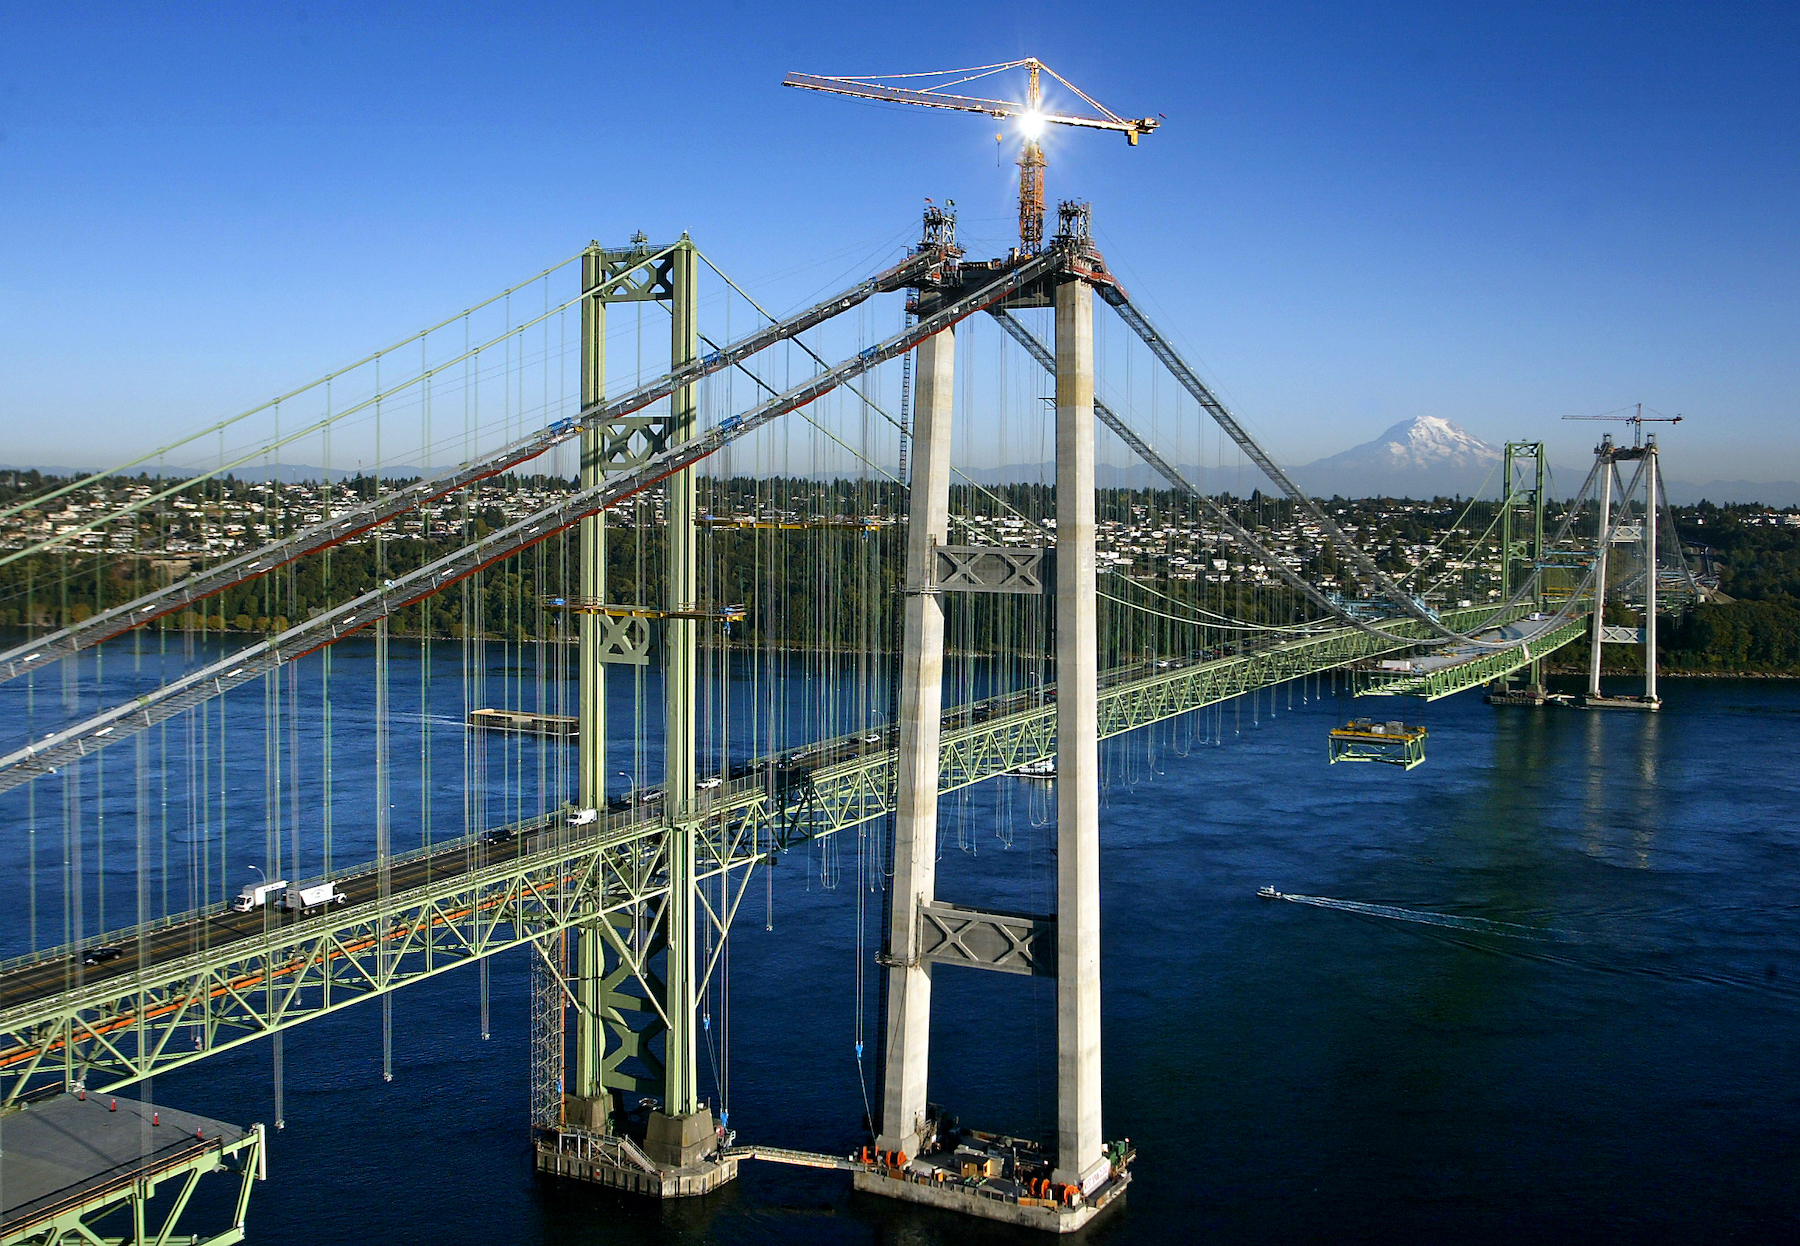 The 2007 and 1950 Tacoma Narrows Bridges